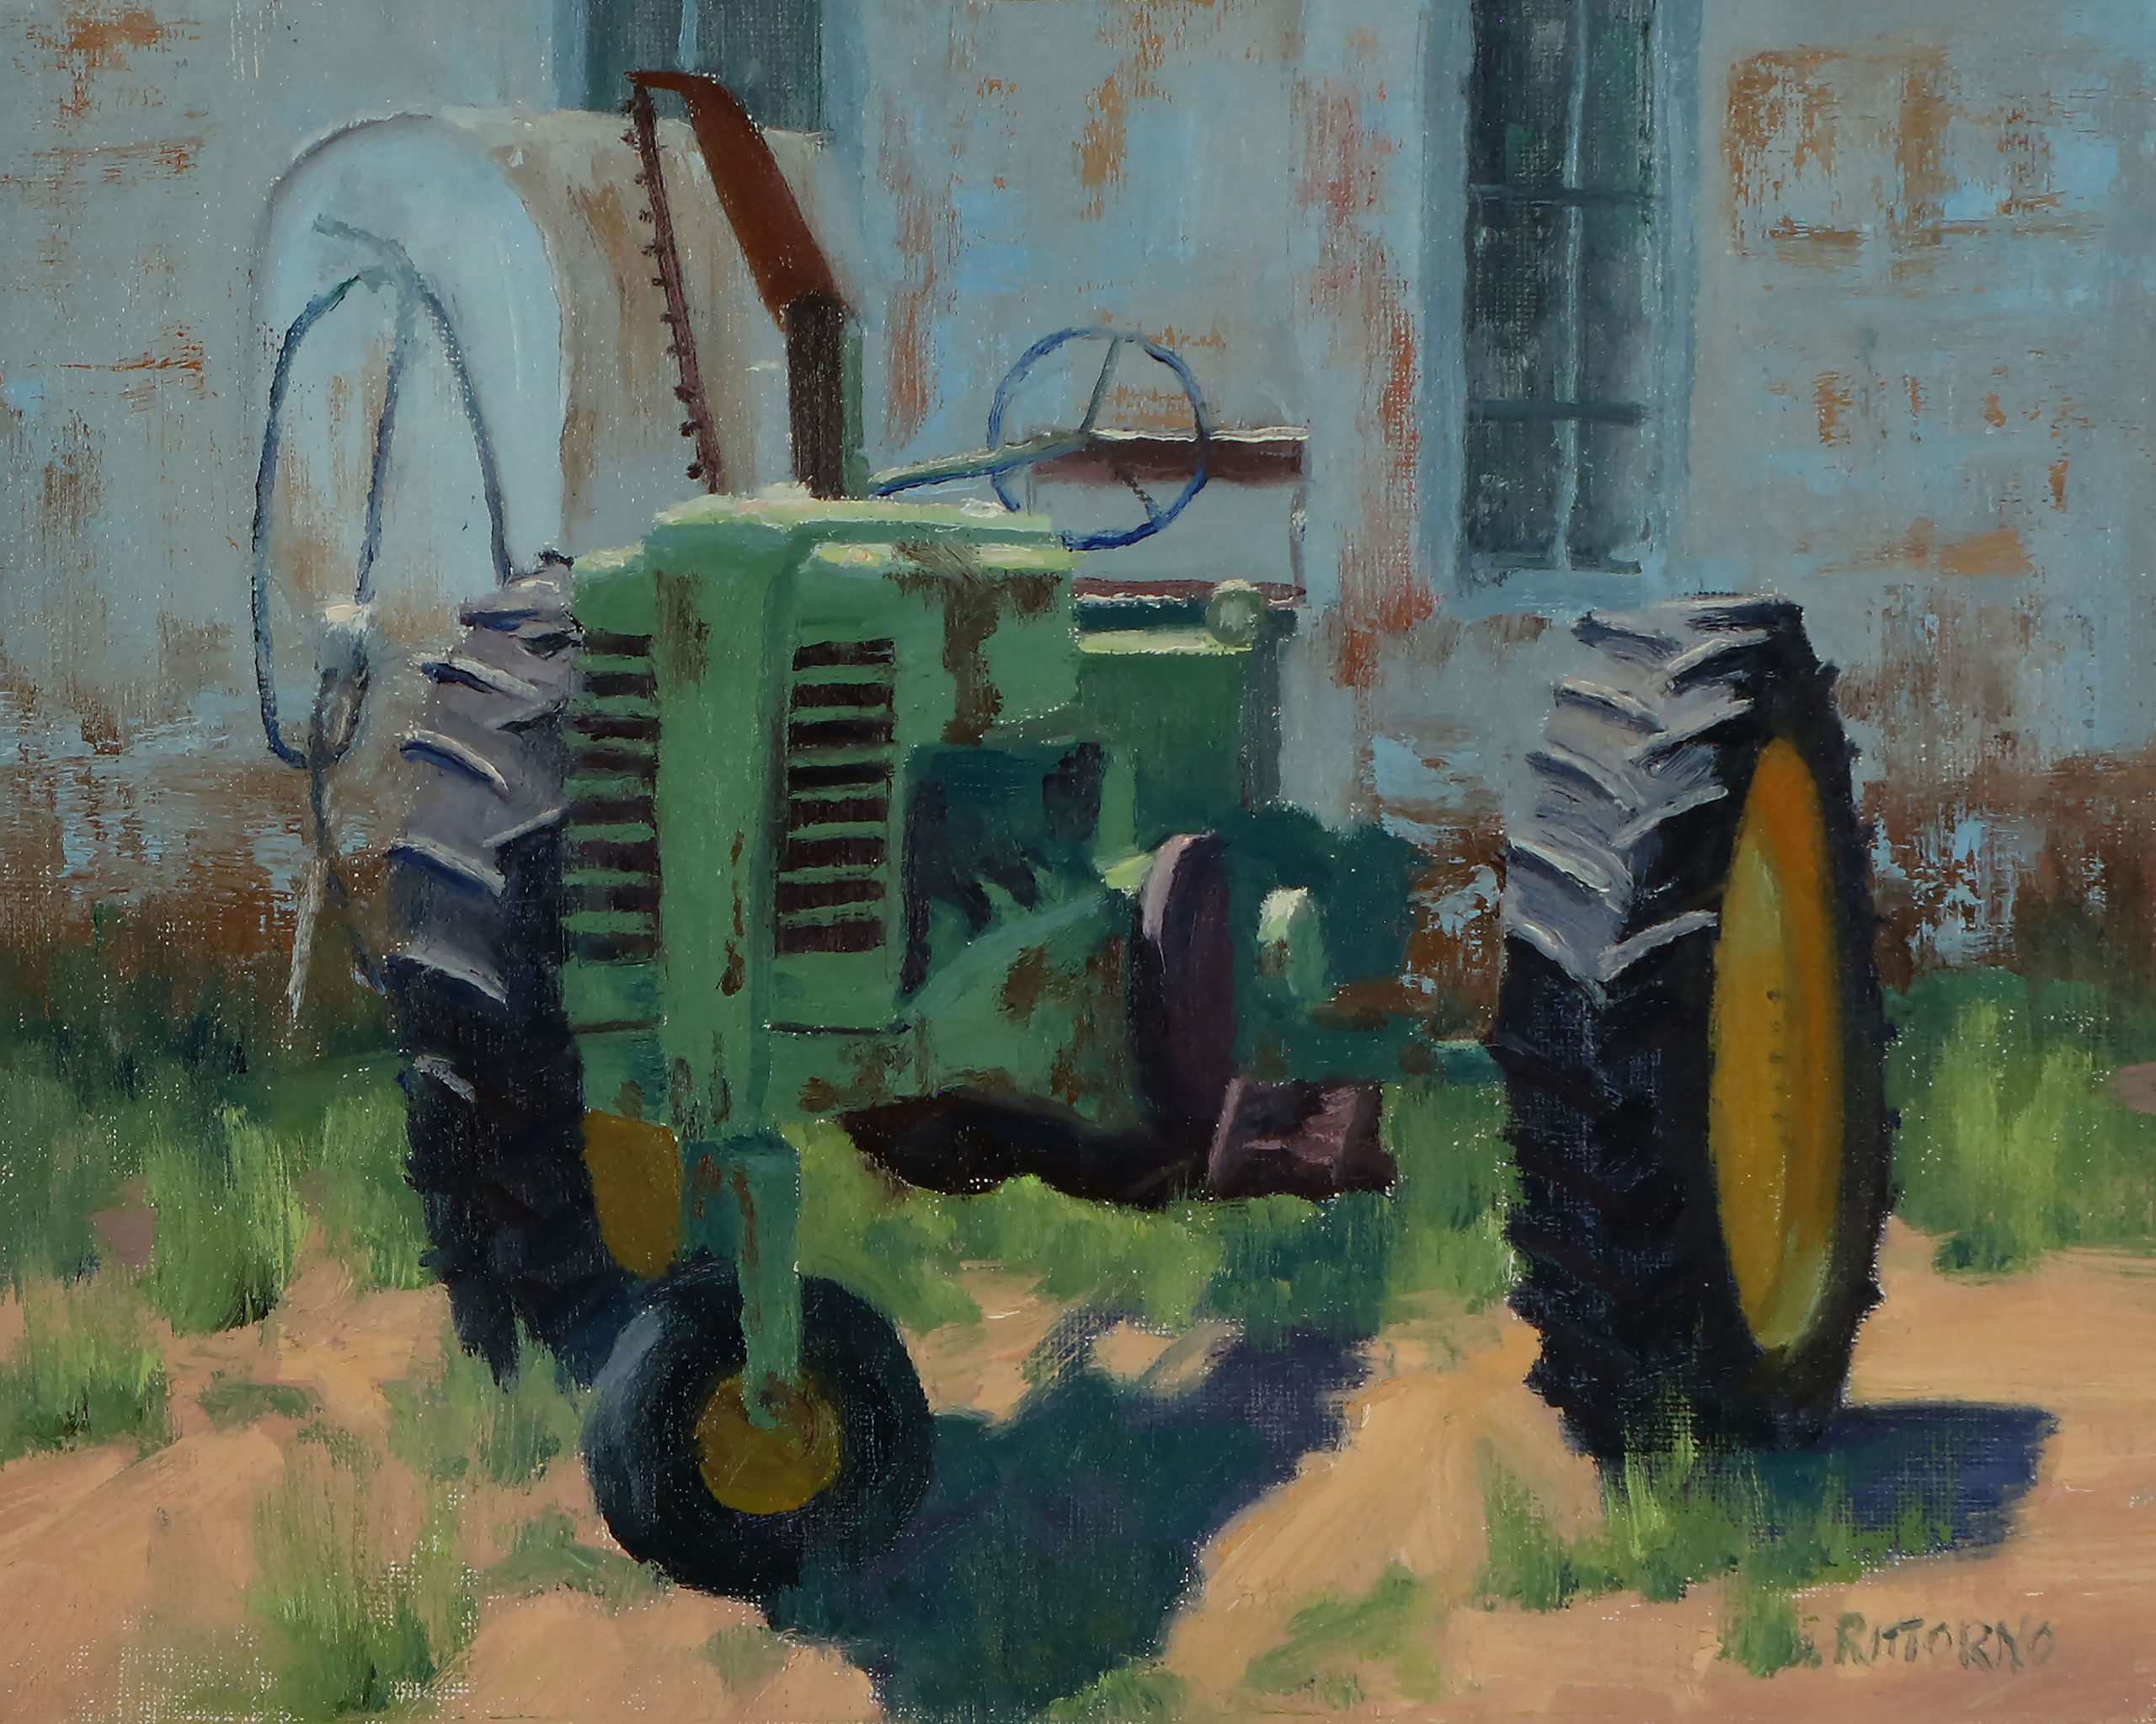 rural paintings - "Still Runs Like a Deere" by Mark Rittorno